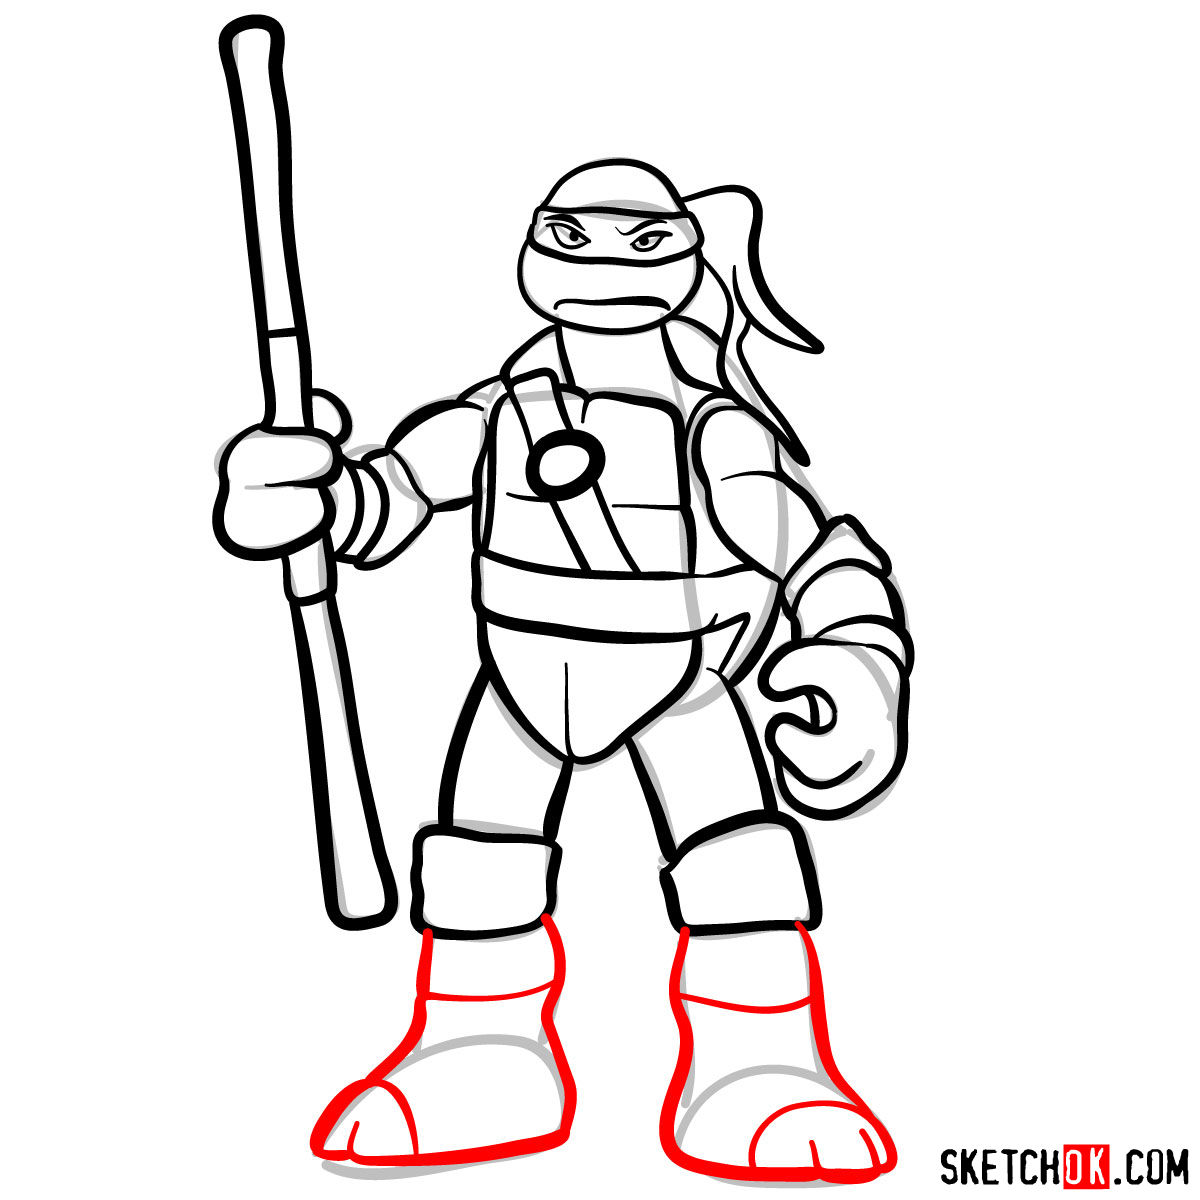 How to draw Donatello ninja turtle toy - step 10